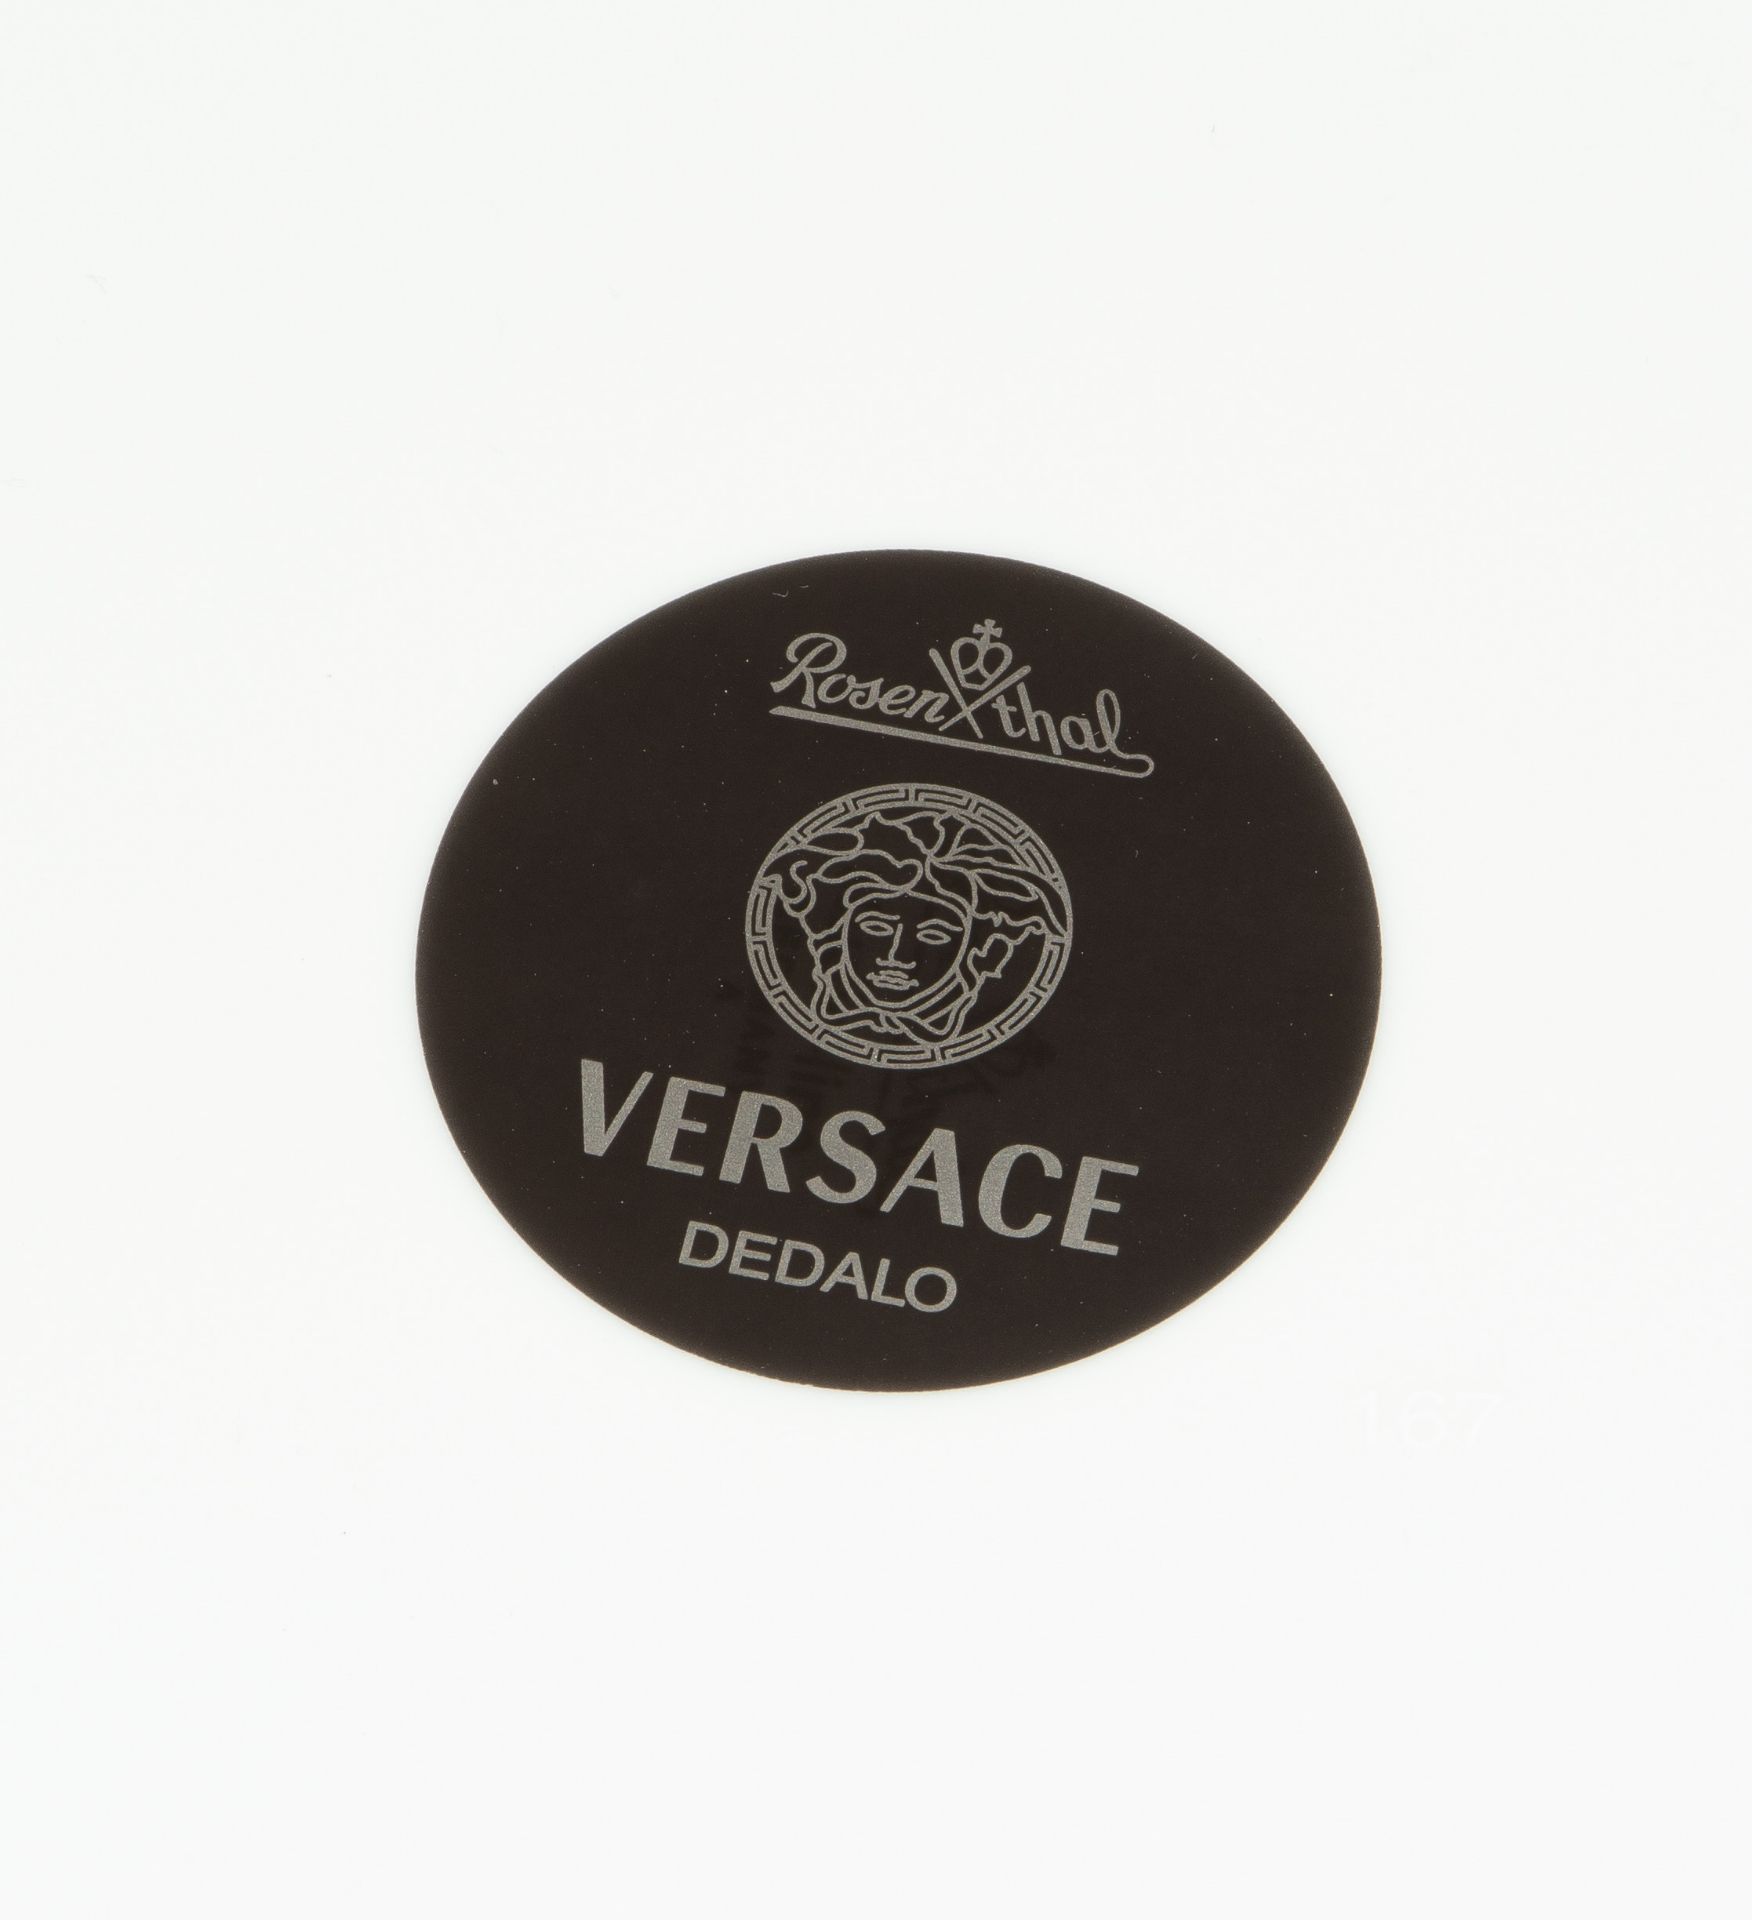 Versace, Tafel- und Kaffeeservice "Dedalo" - Image 21 of 27